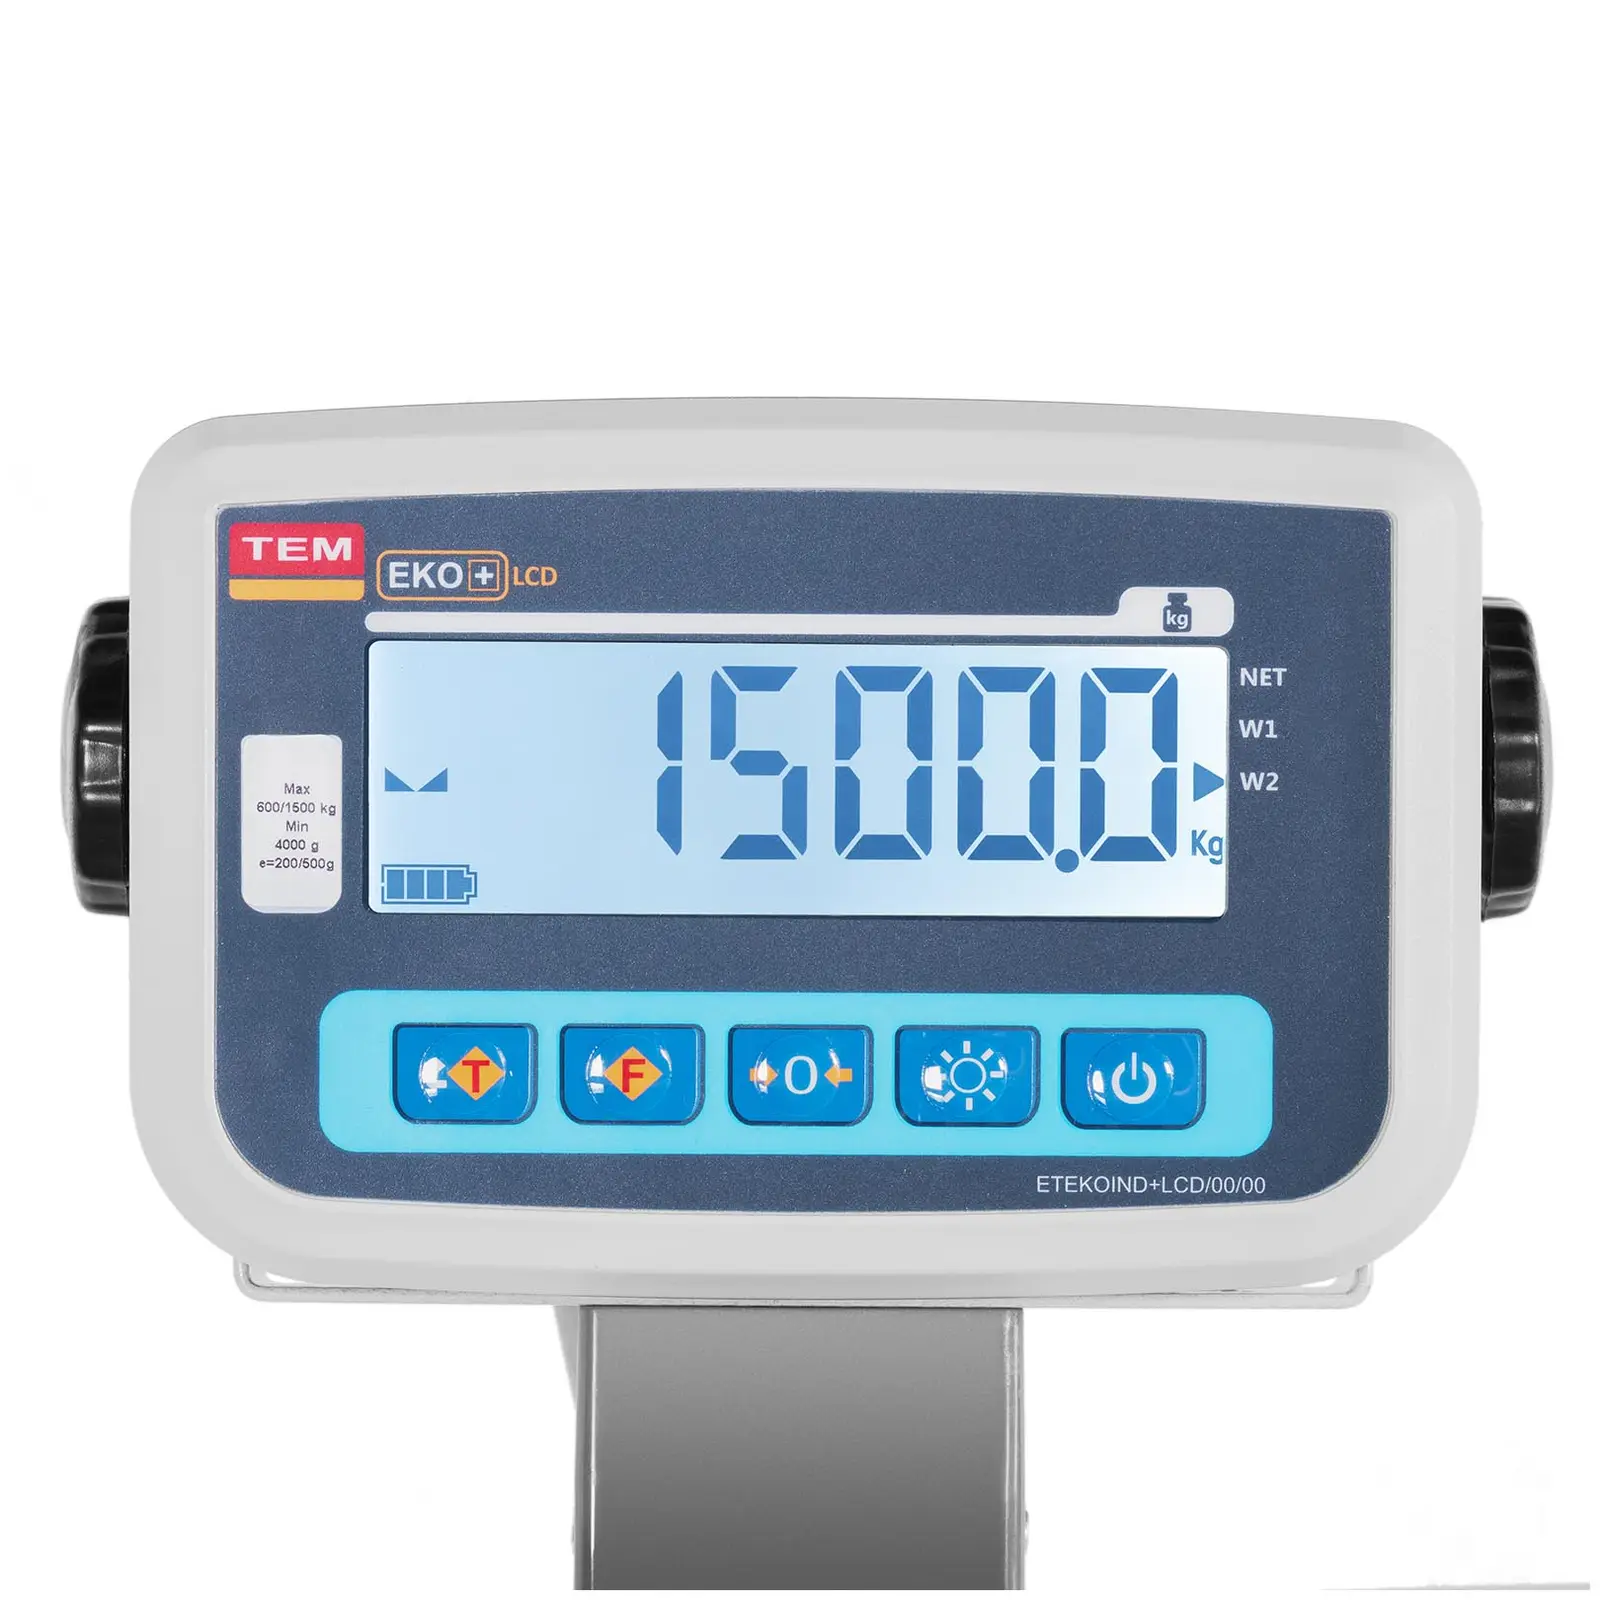 Eläinvaaka - varmennettu - 200 g (0 - 600 kg) / 500 g (600 - 1500 kg) - eläinystävällinen häkki - LCD